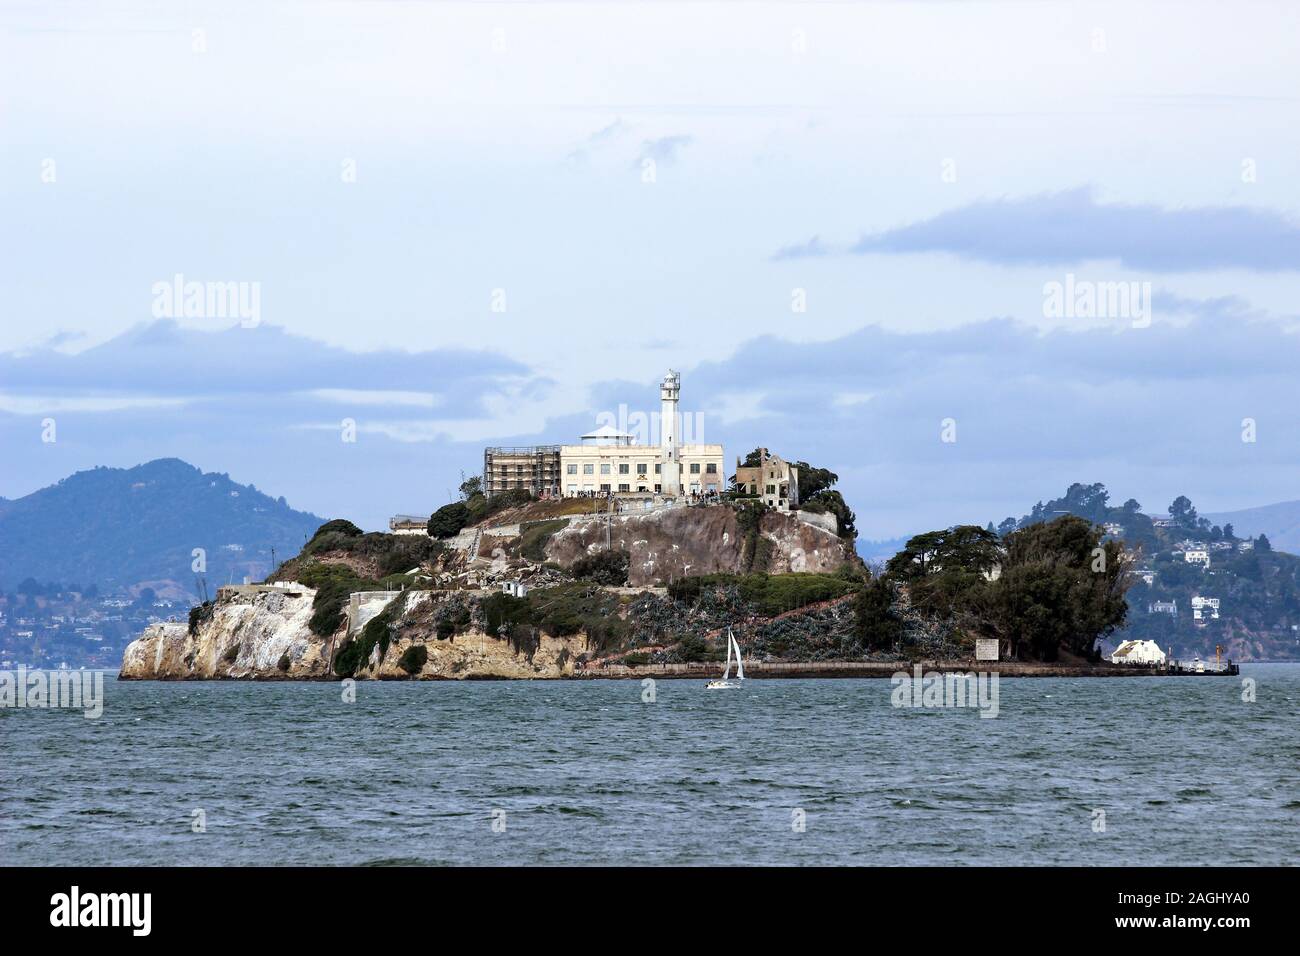 Alcatraz prison island in San Francisco Bay, United States of America Stock Photo